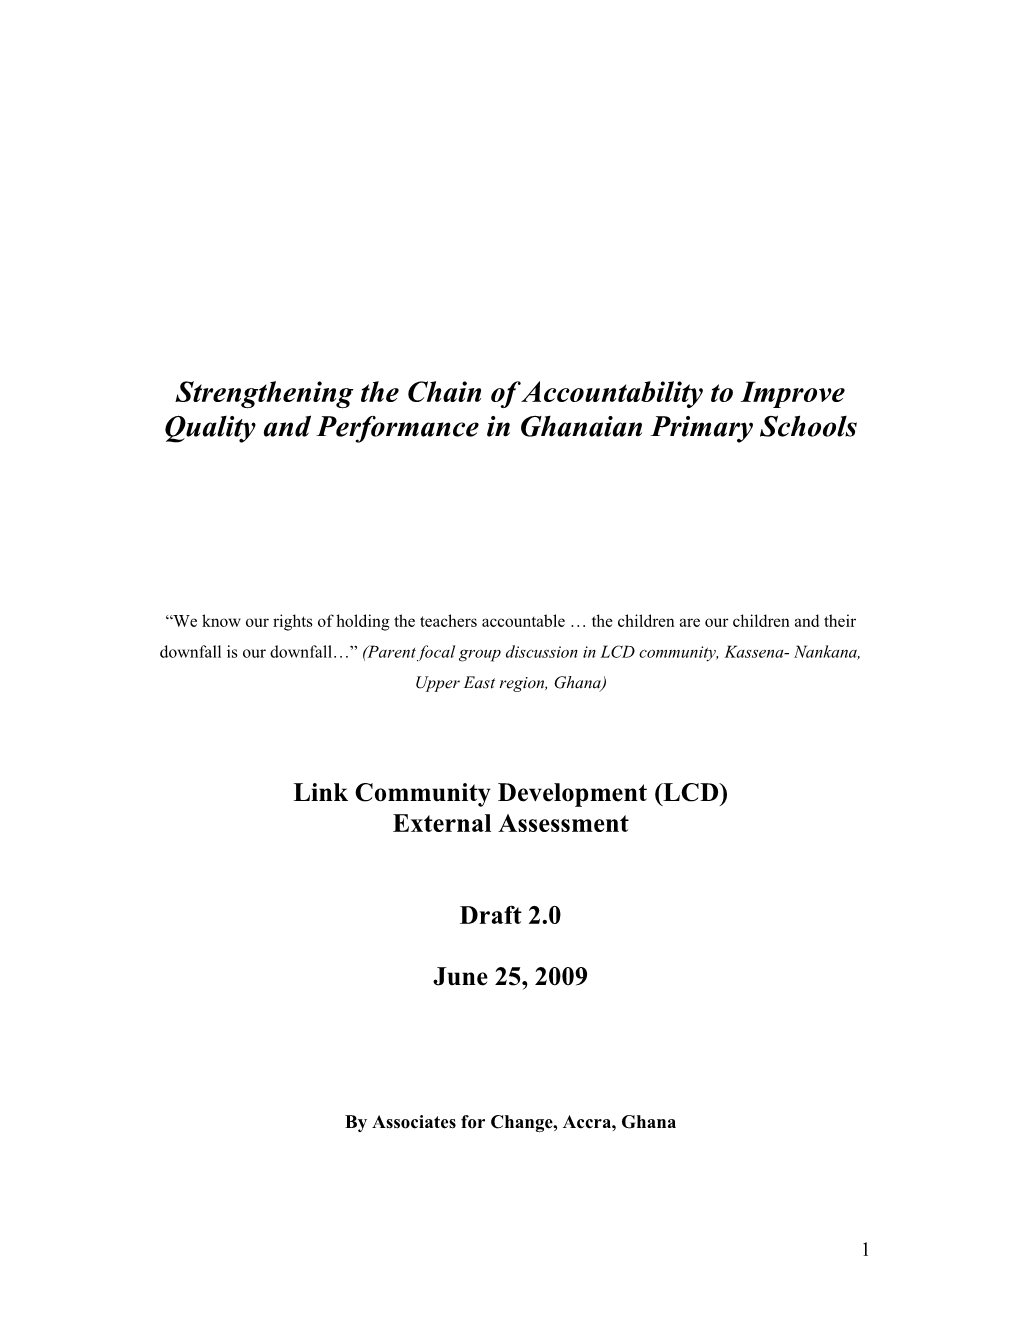 Link Community Development Assessment